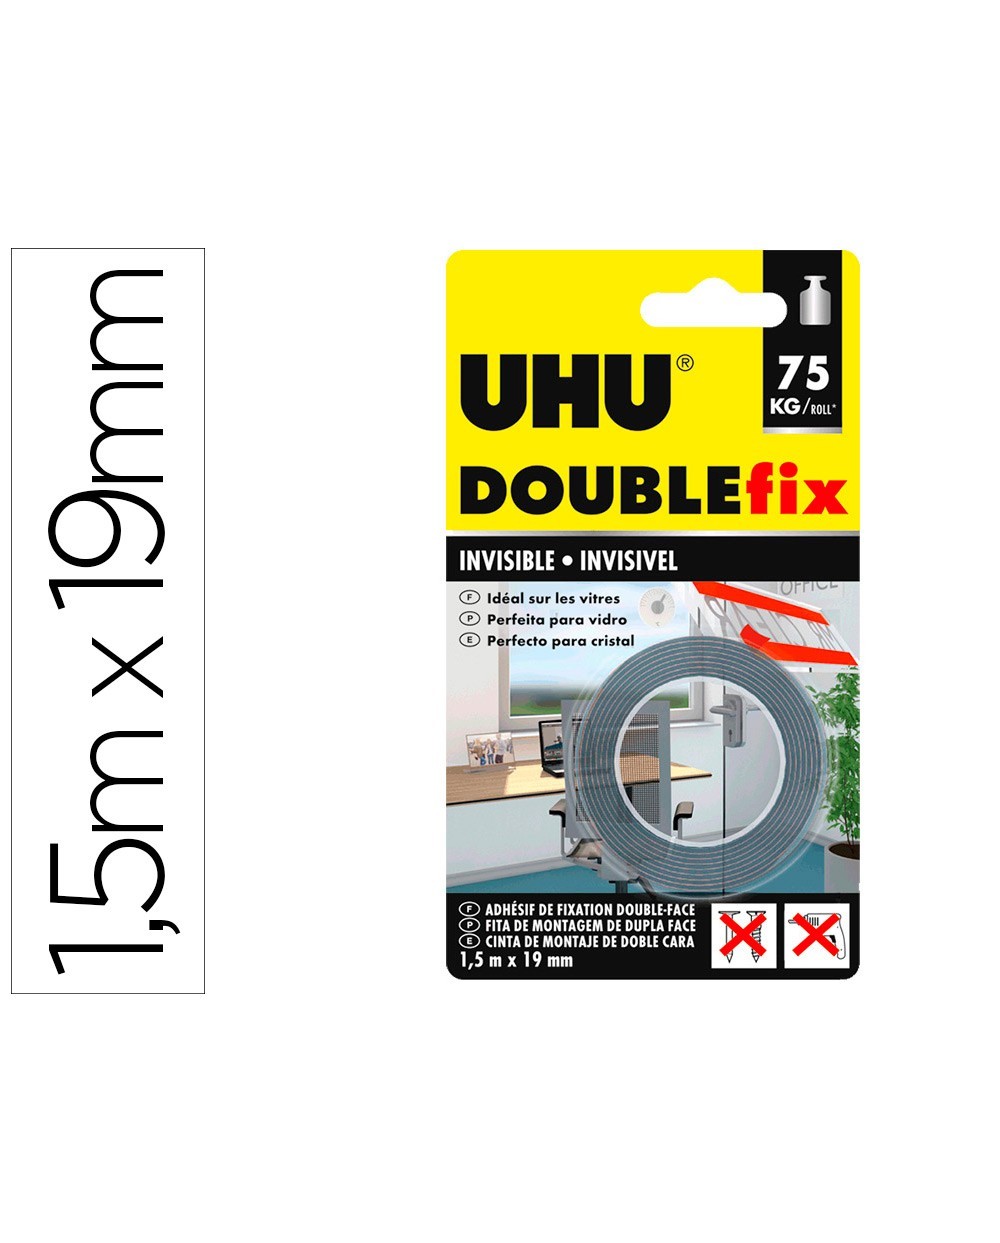 Cinta adhesiva uhu doublefix invisible doble cara extra fuerte 15 m x 19 mm